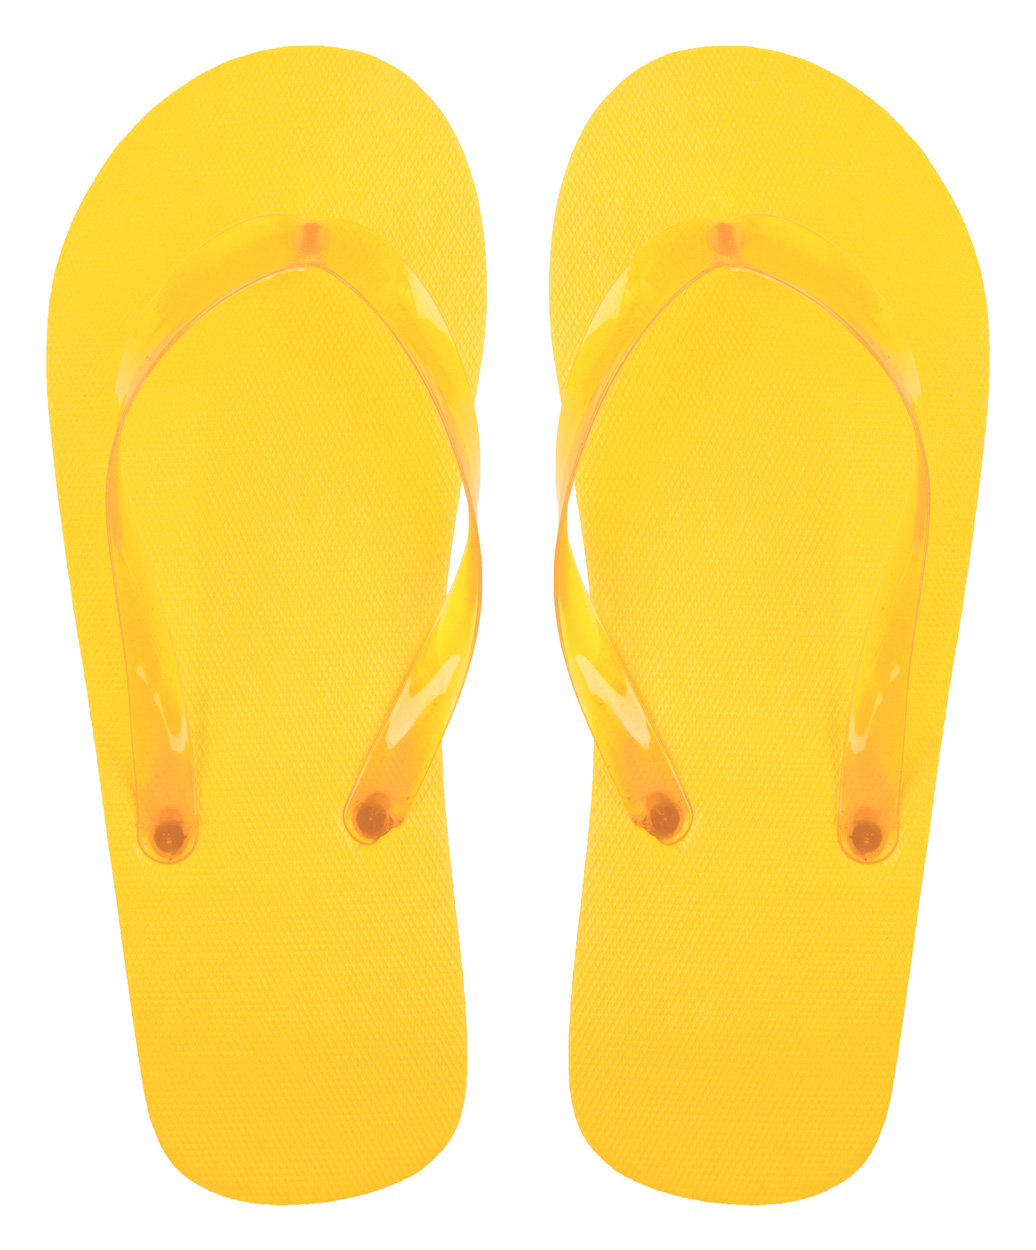 Boracay Beach Flip Flops - yellow